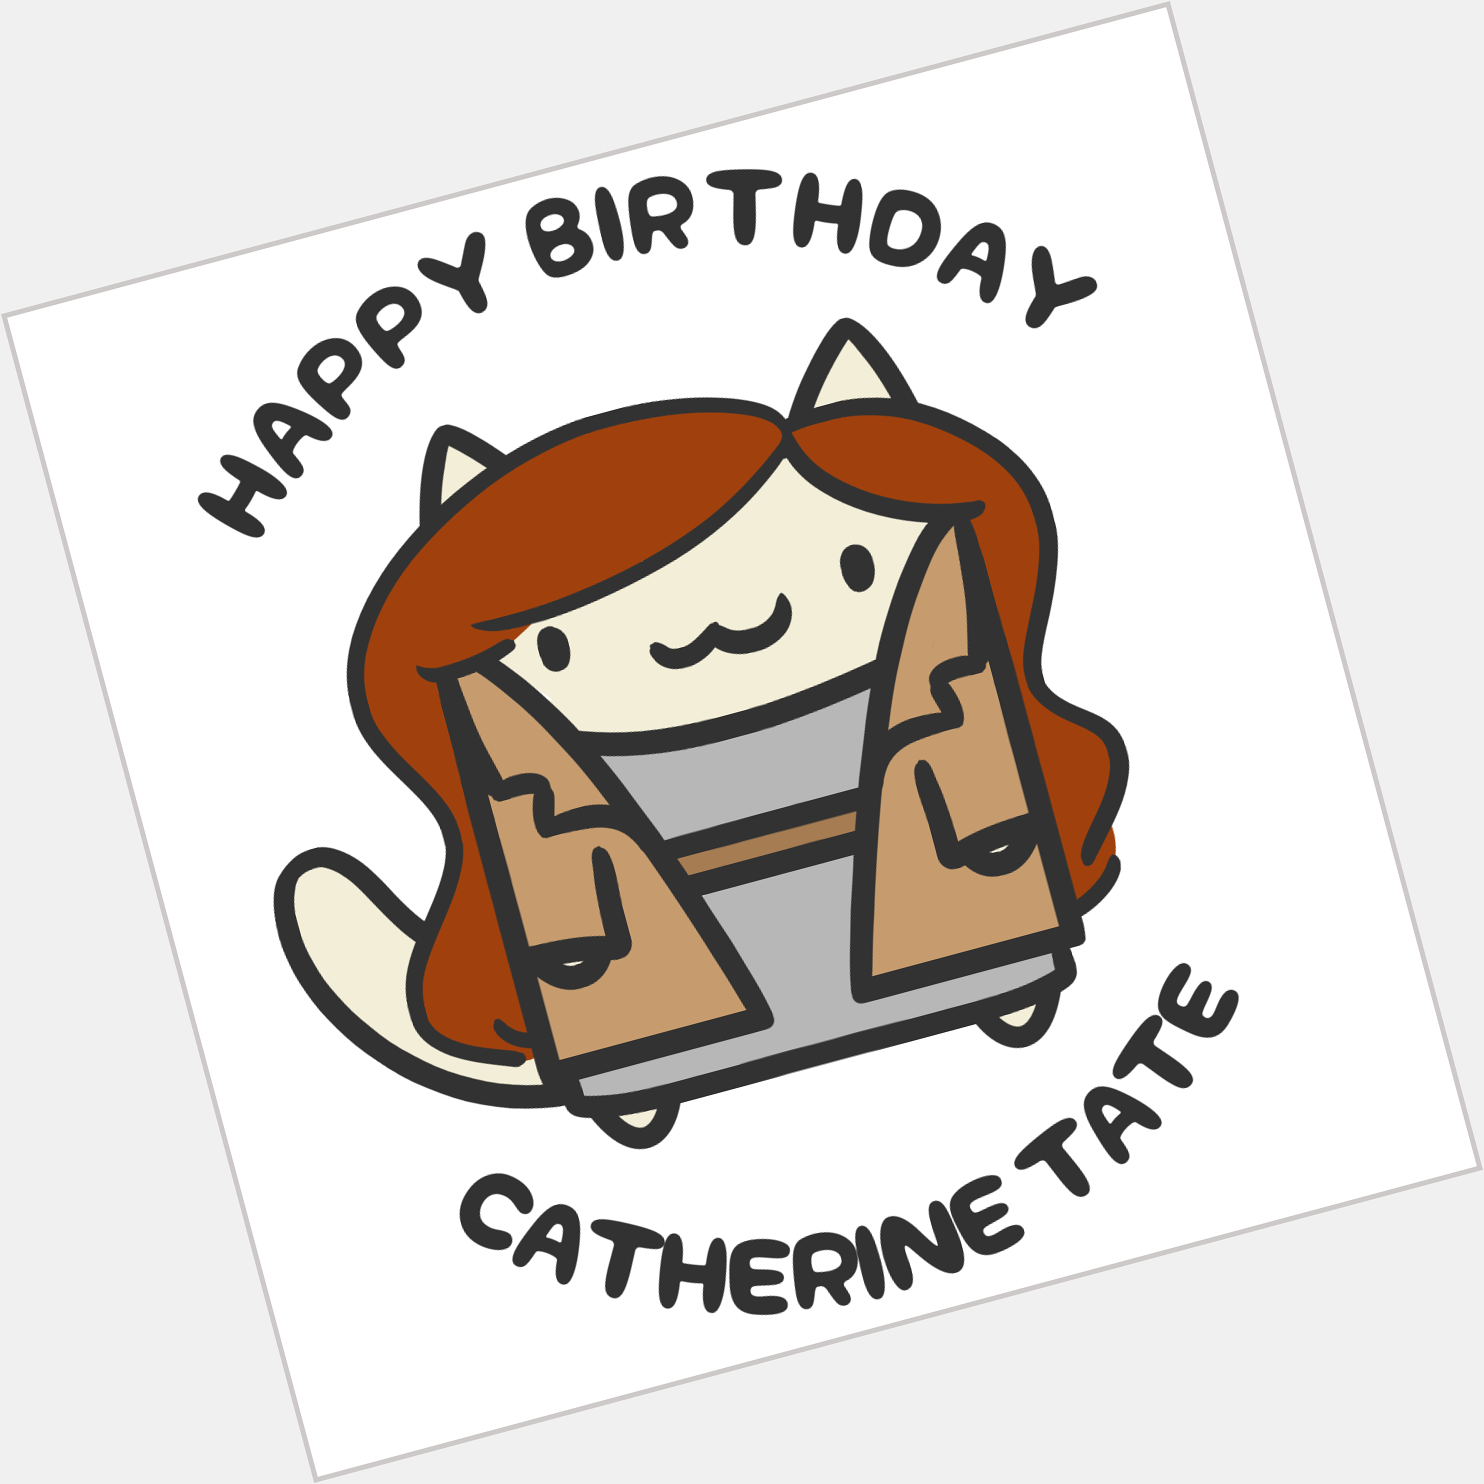 Happy Birthday, Catherine Tate!  